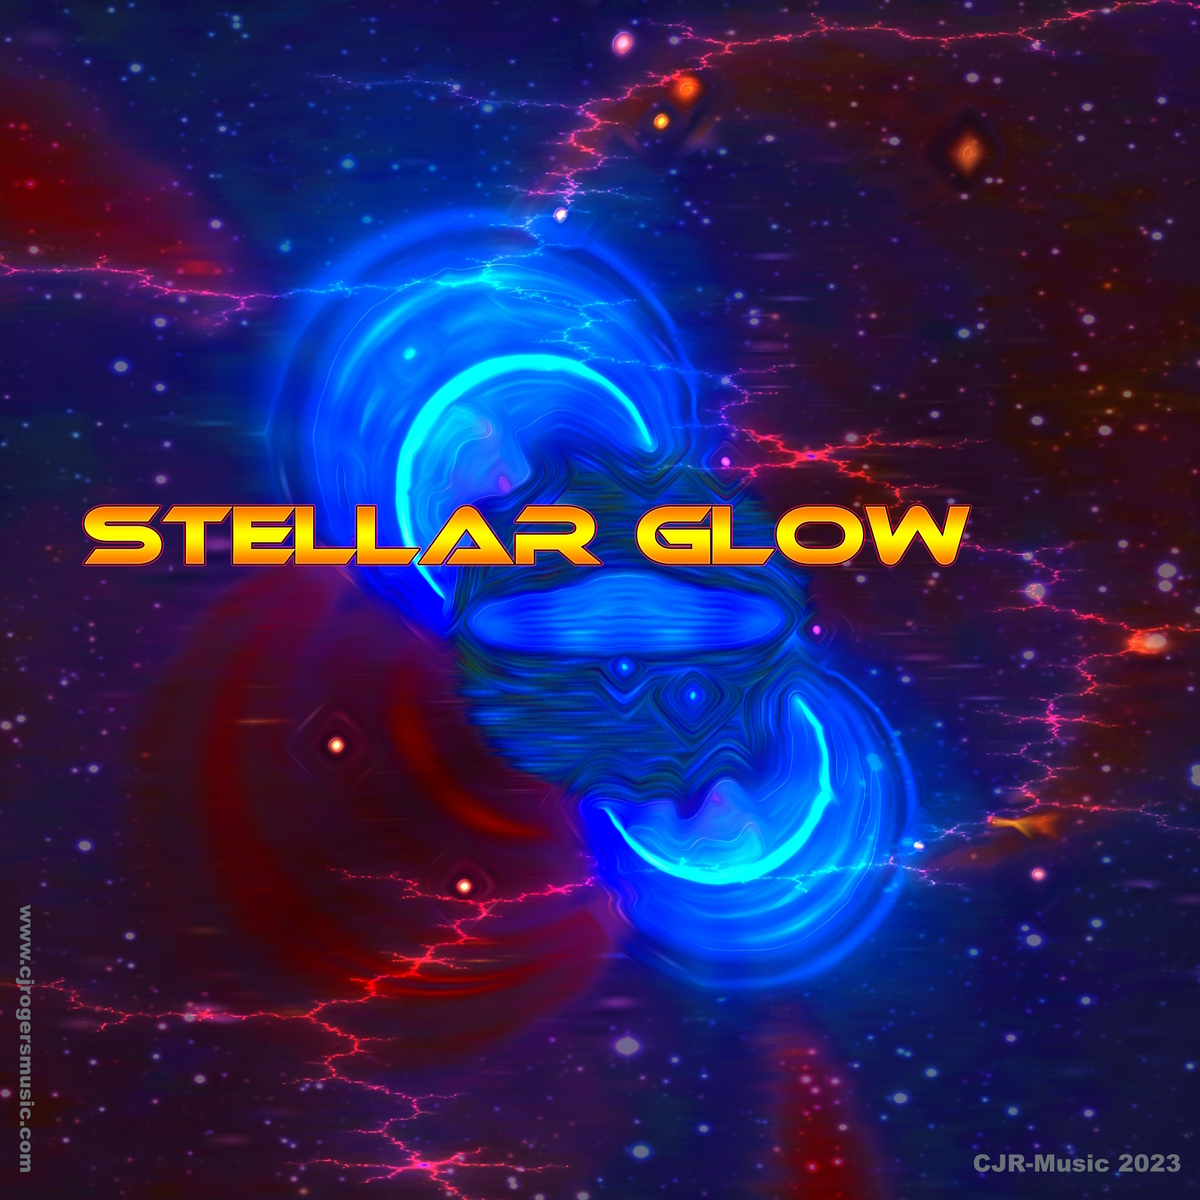 Stellar Glow - Fullsize Cover Art